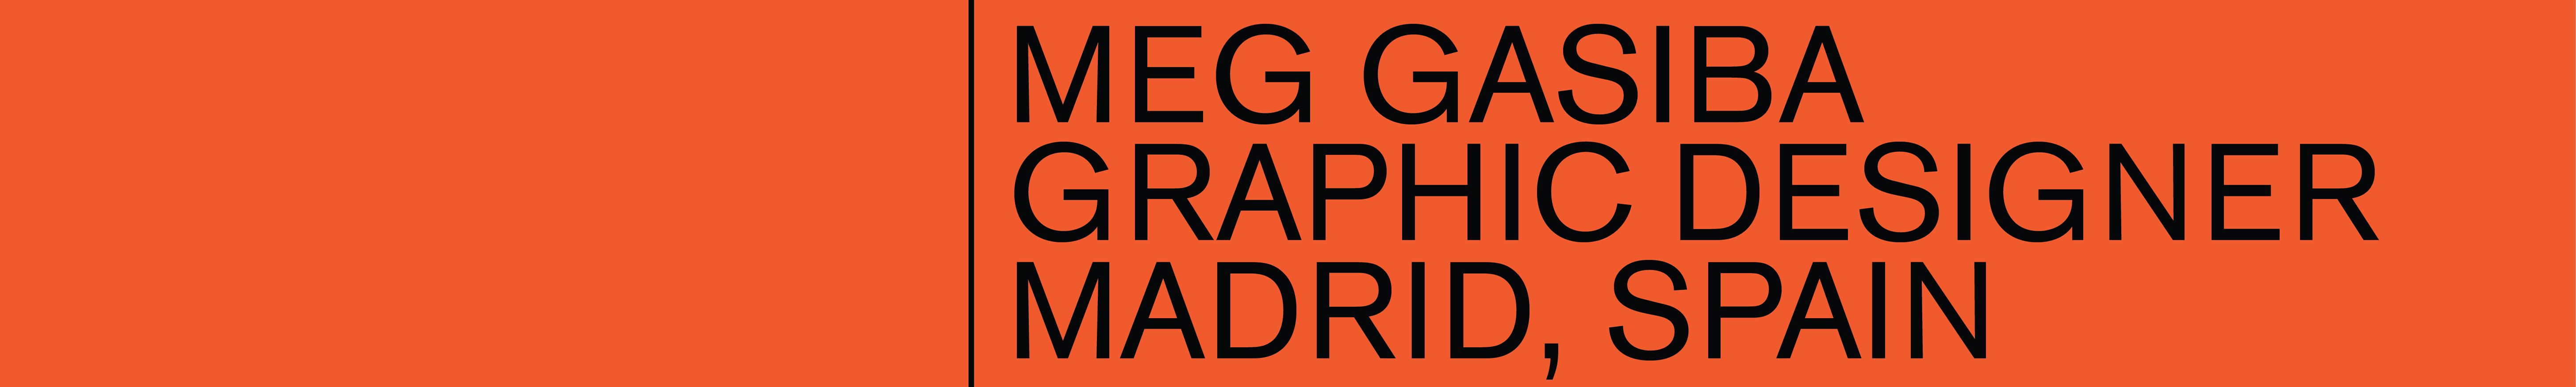 Meg Gasiba's profile banner